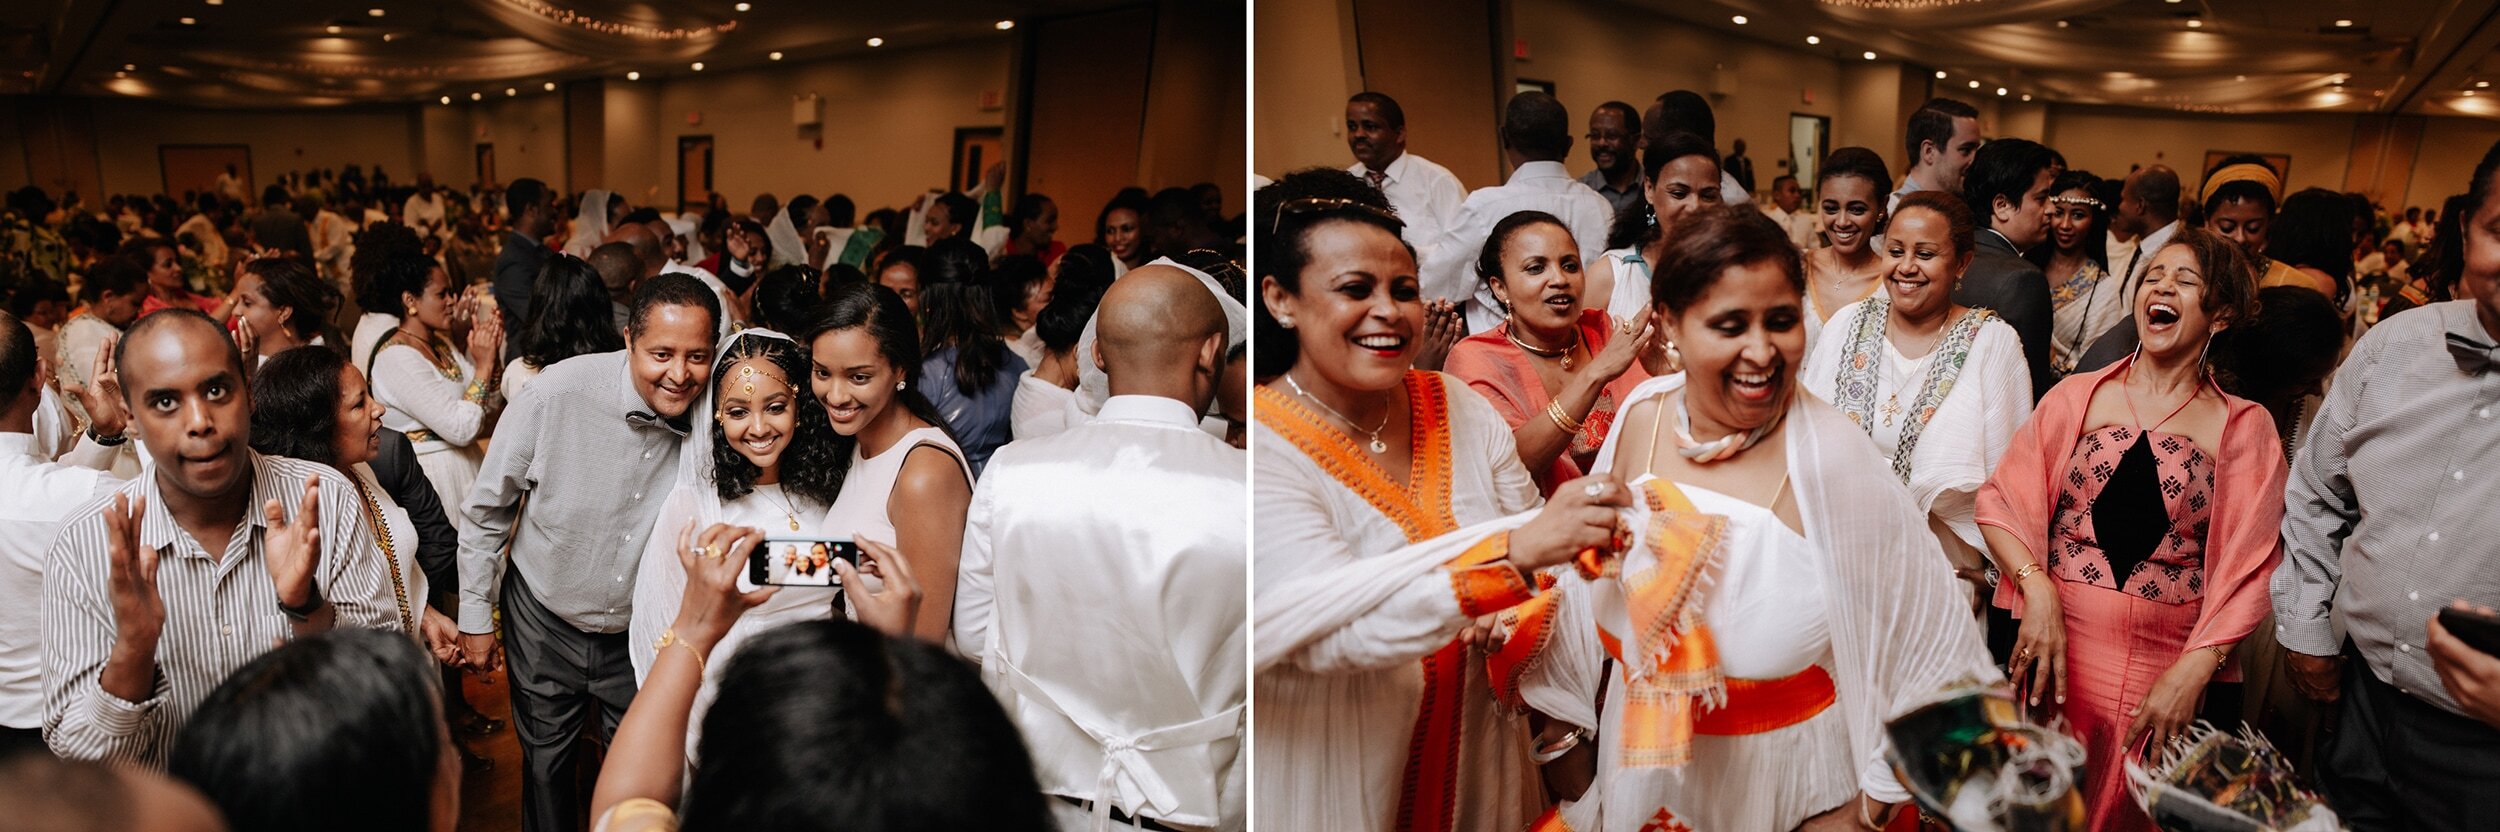 Traditional-ethiopian-melse-wedding-photography-in-minnesota_34.jpg